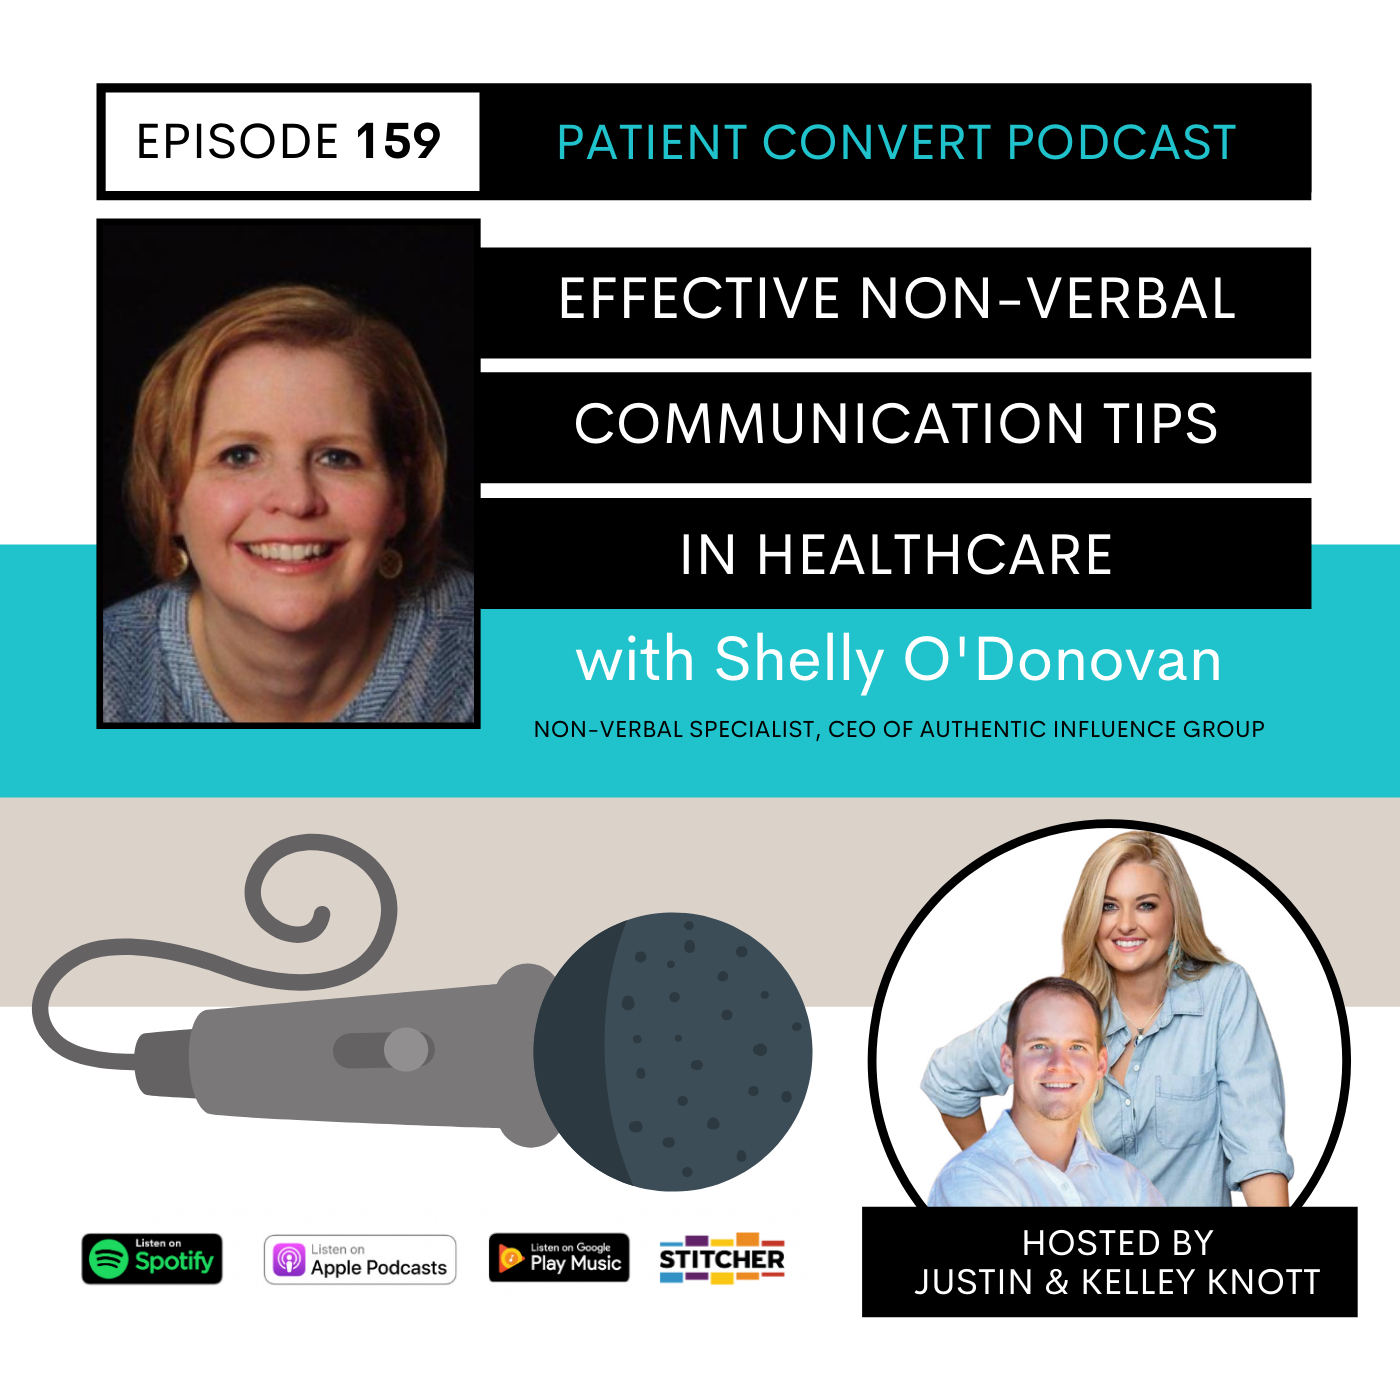 Patient Convert Podcast Episode 159